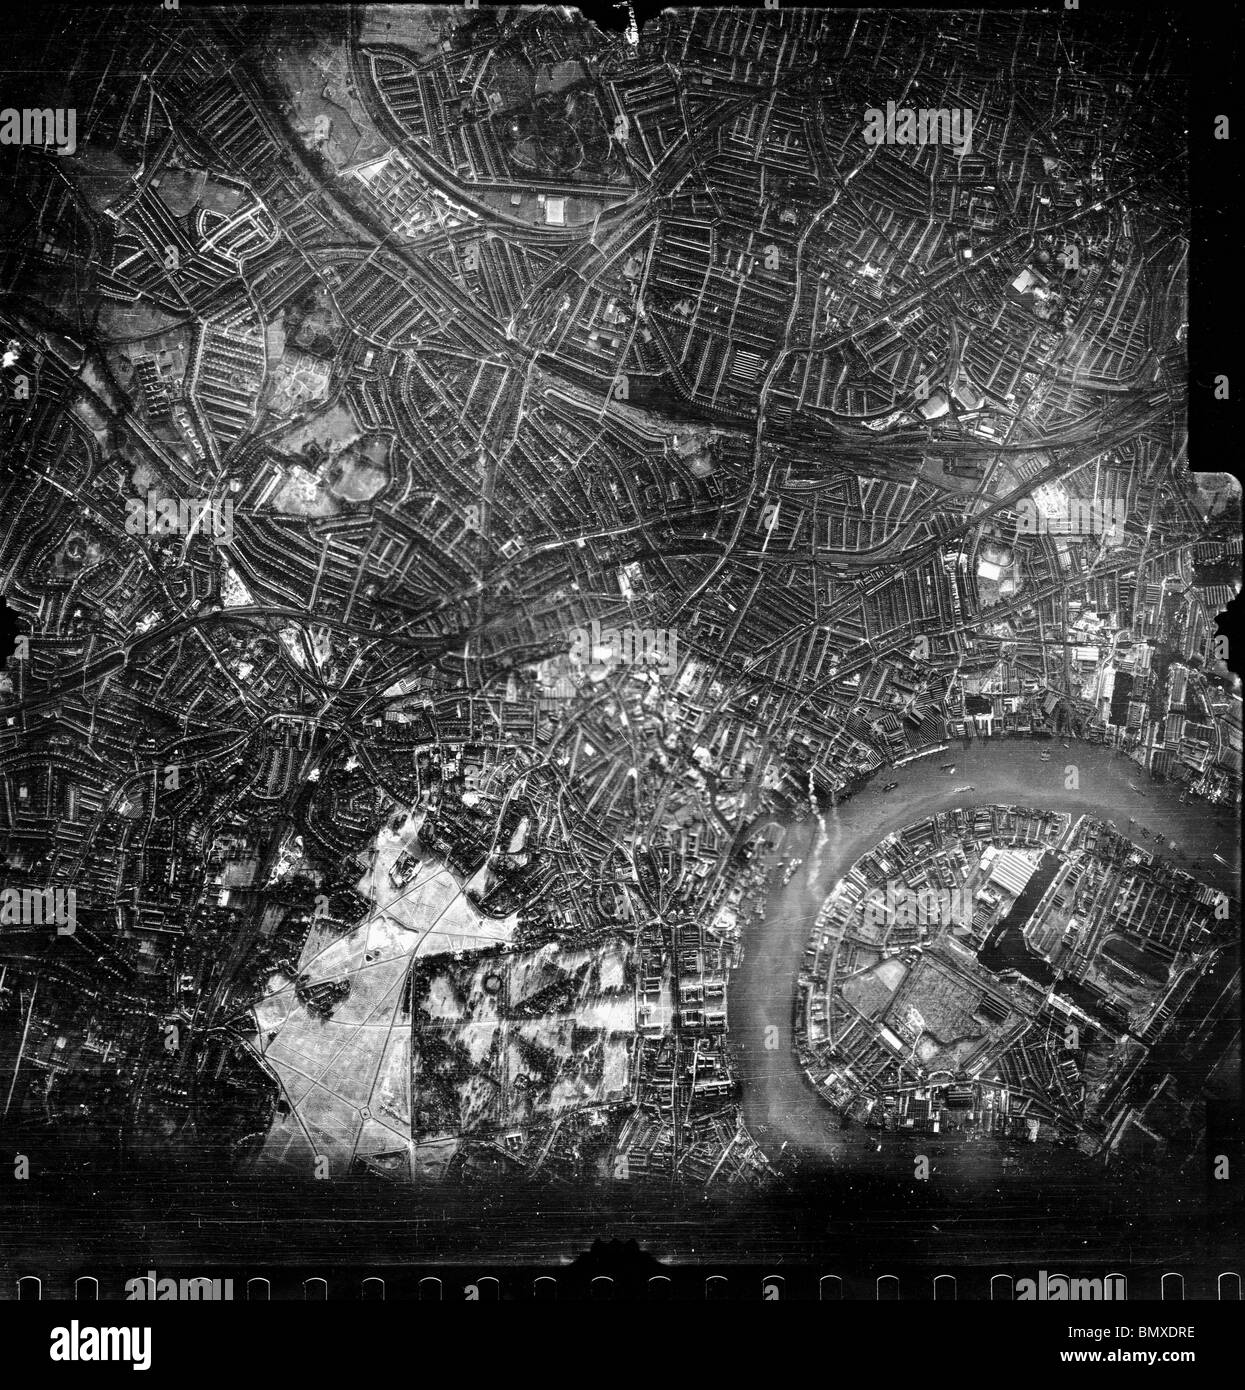 London Blitz Luftwaffe Bombing Raid Stock Photo